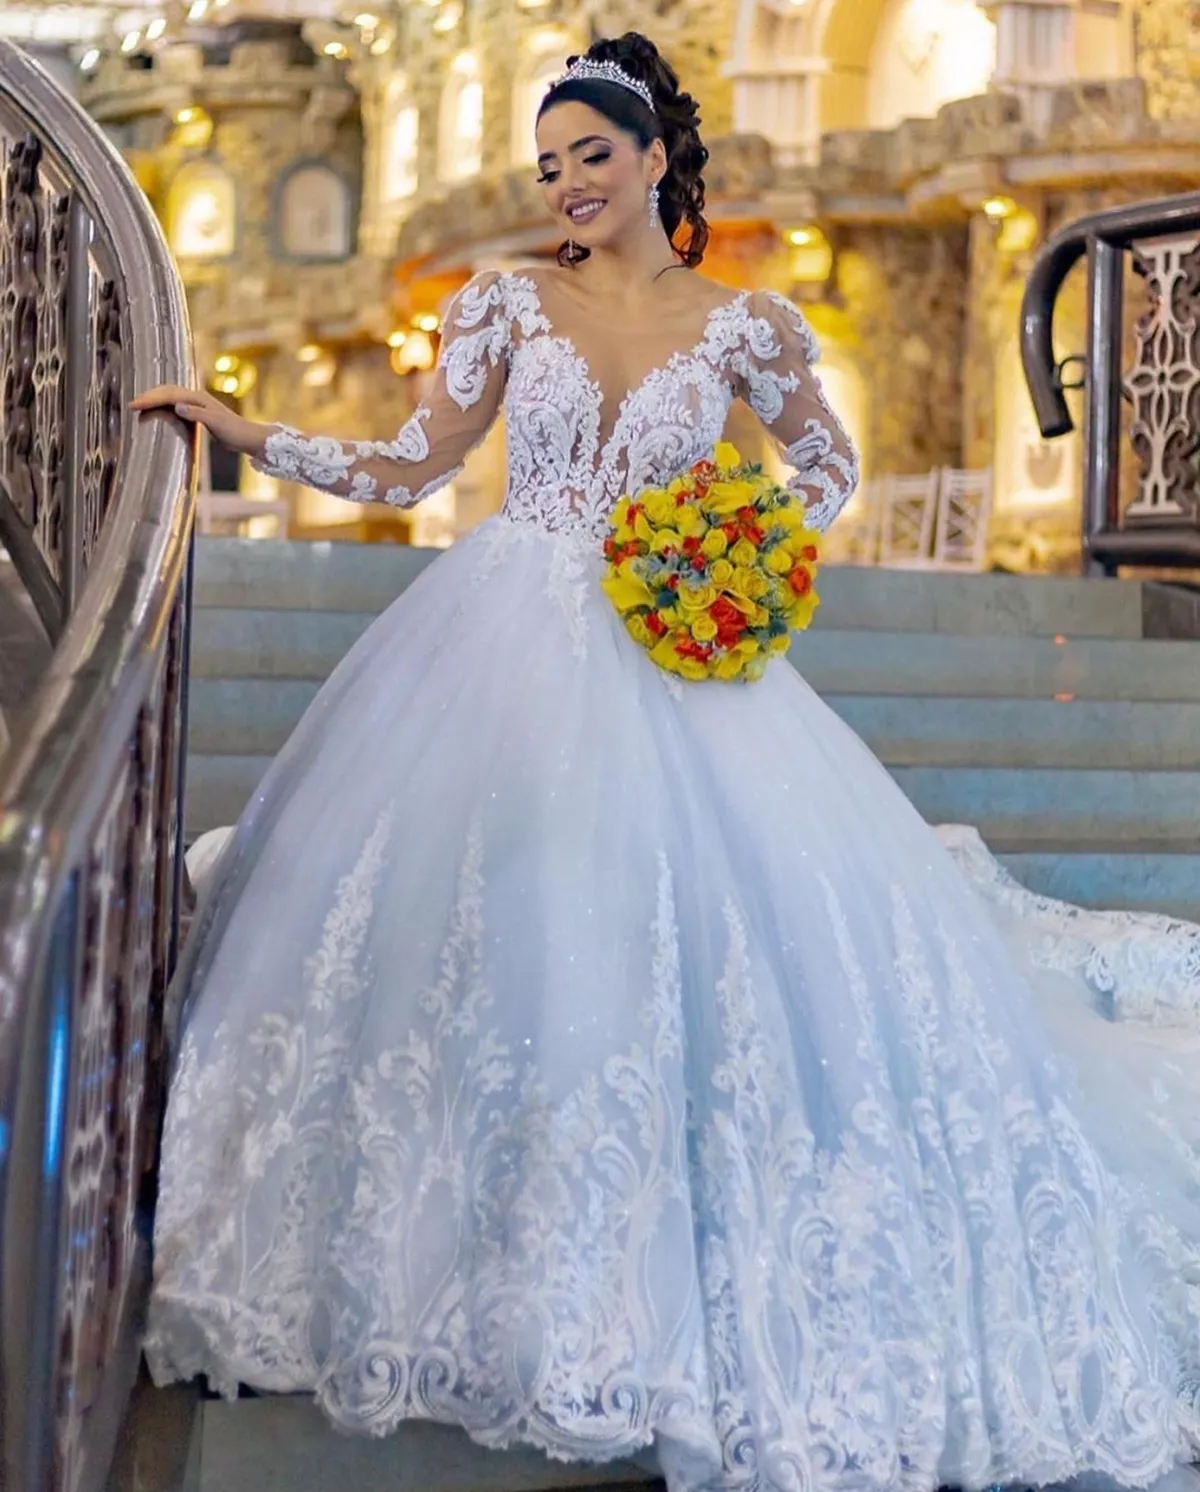 Glamorous Ball Gown Wedding Dresses V-neck Lace Applicants Transparent Sleeves Decorative Border Chapel Gown Sequins Custom Made Bridal Gown Vestidos De Novia